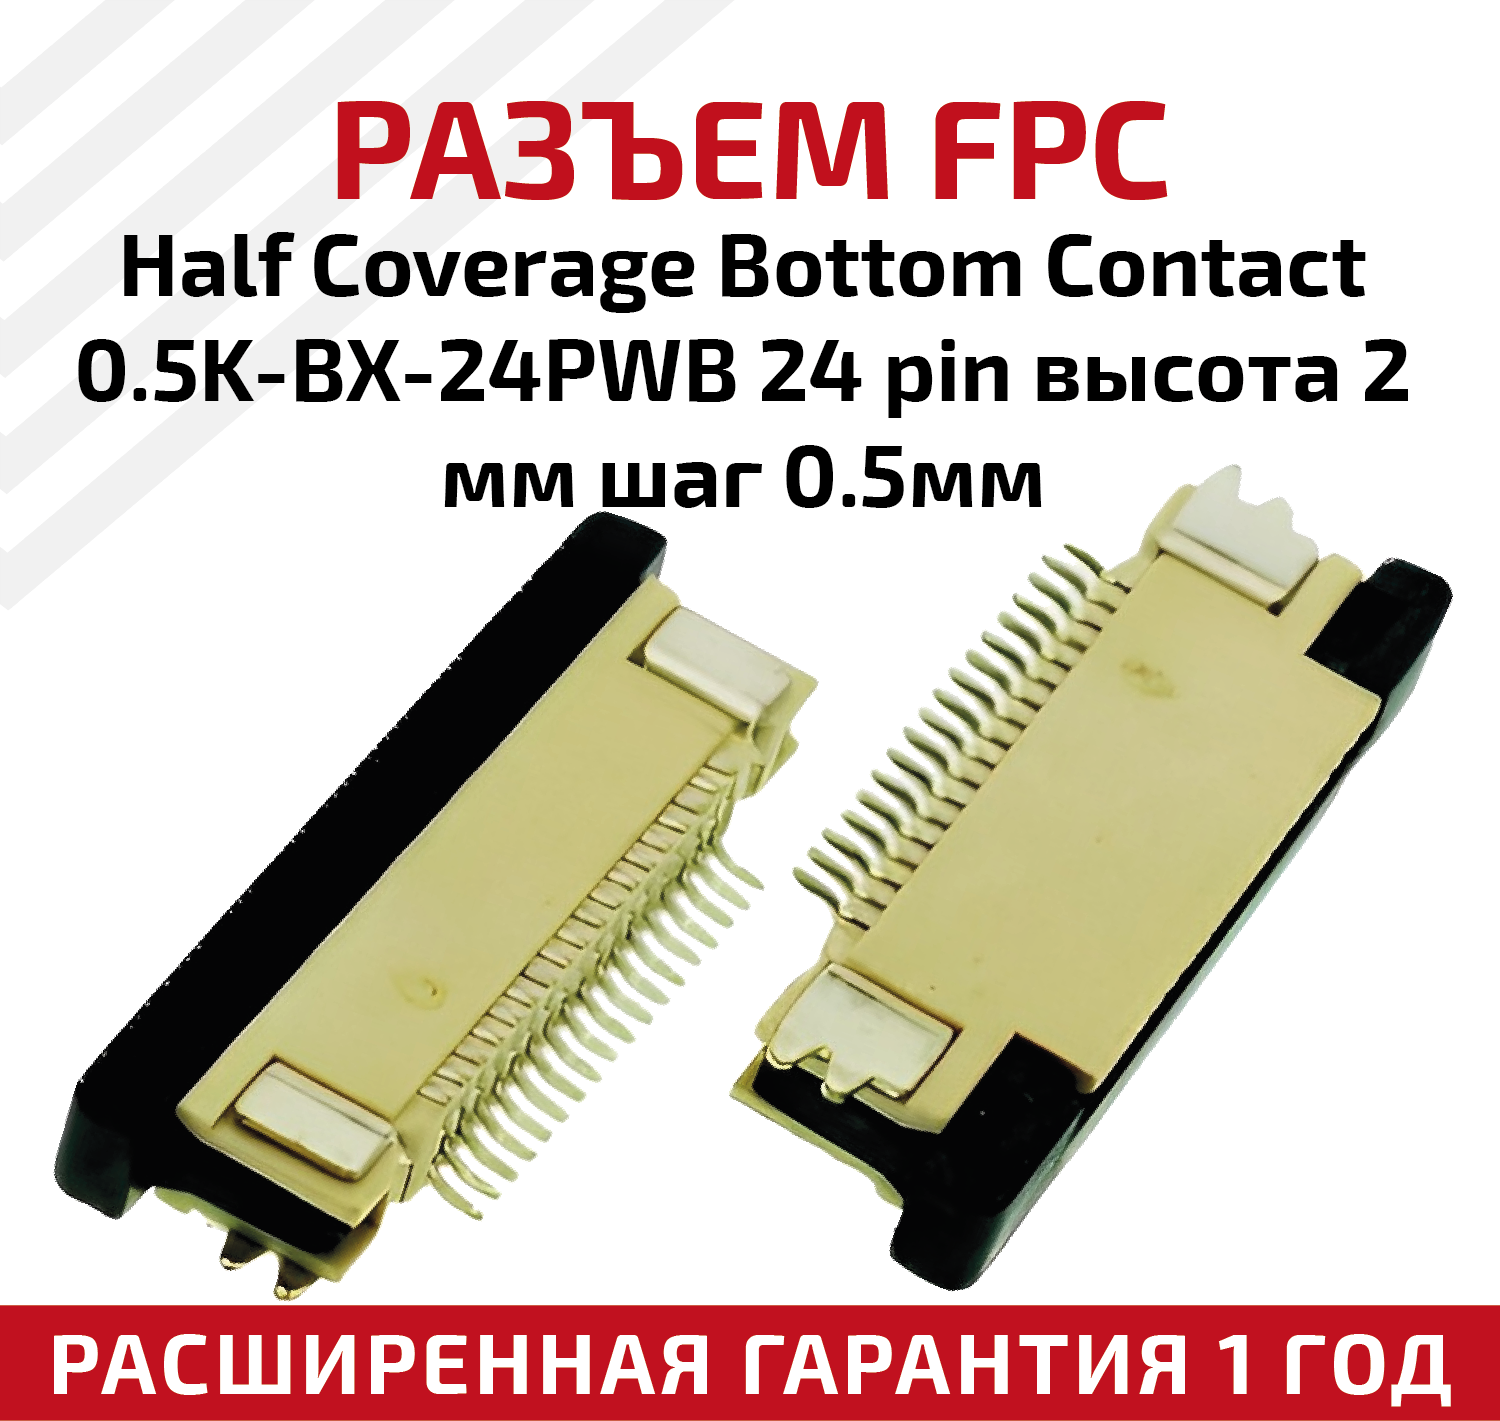 Разъем FPC Half Coverage Bottom Contact 0.5K-BX-24PWB 24 pin, высота 2мм, шаг 0.5мм